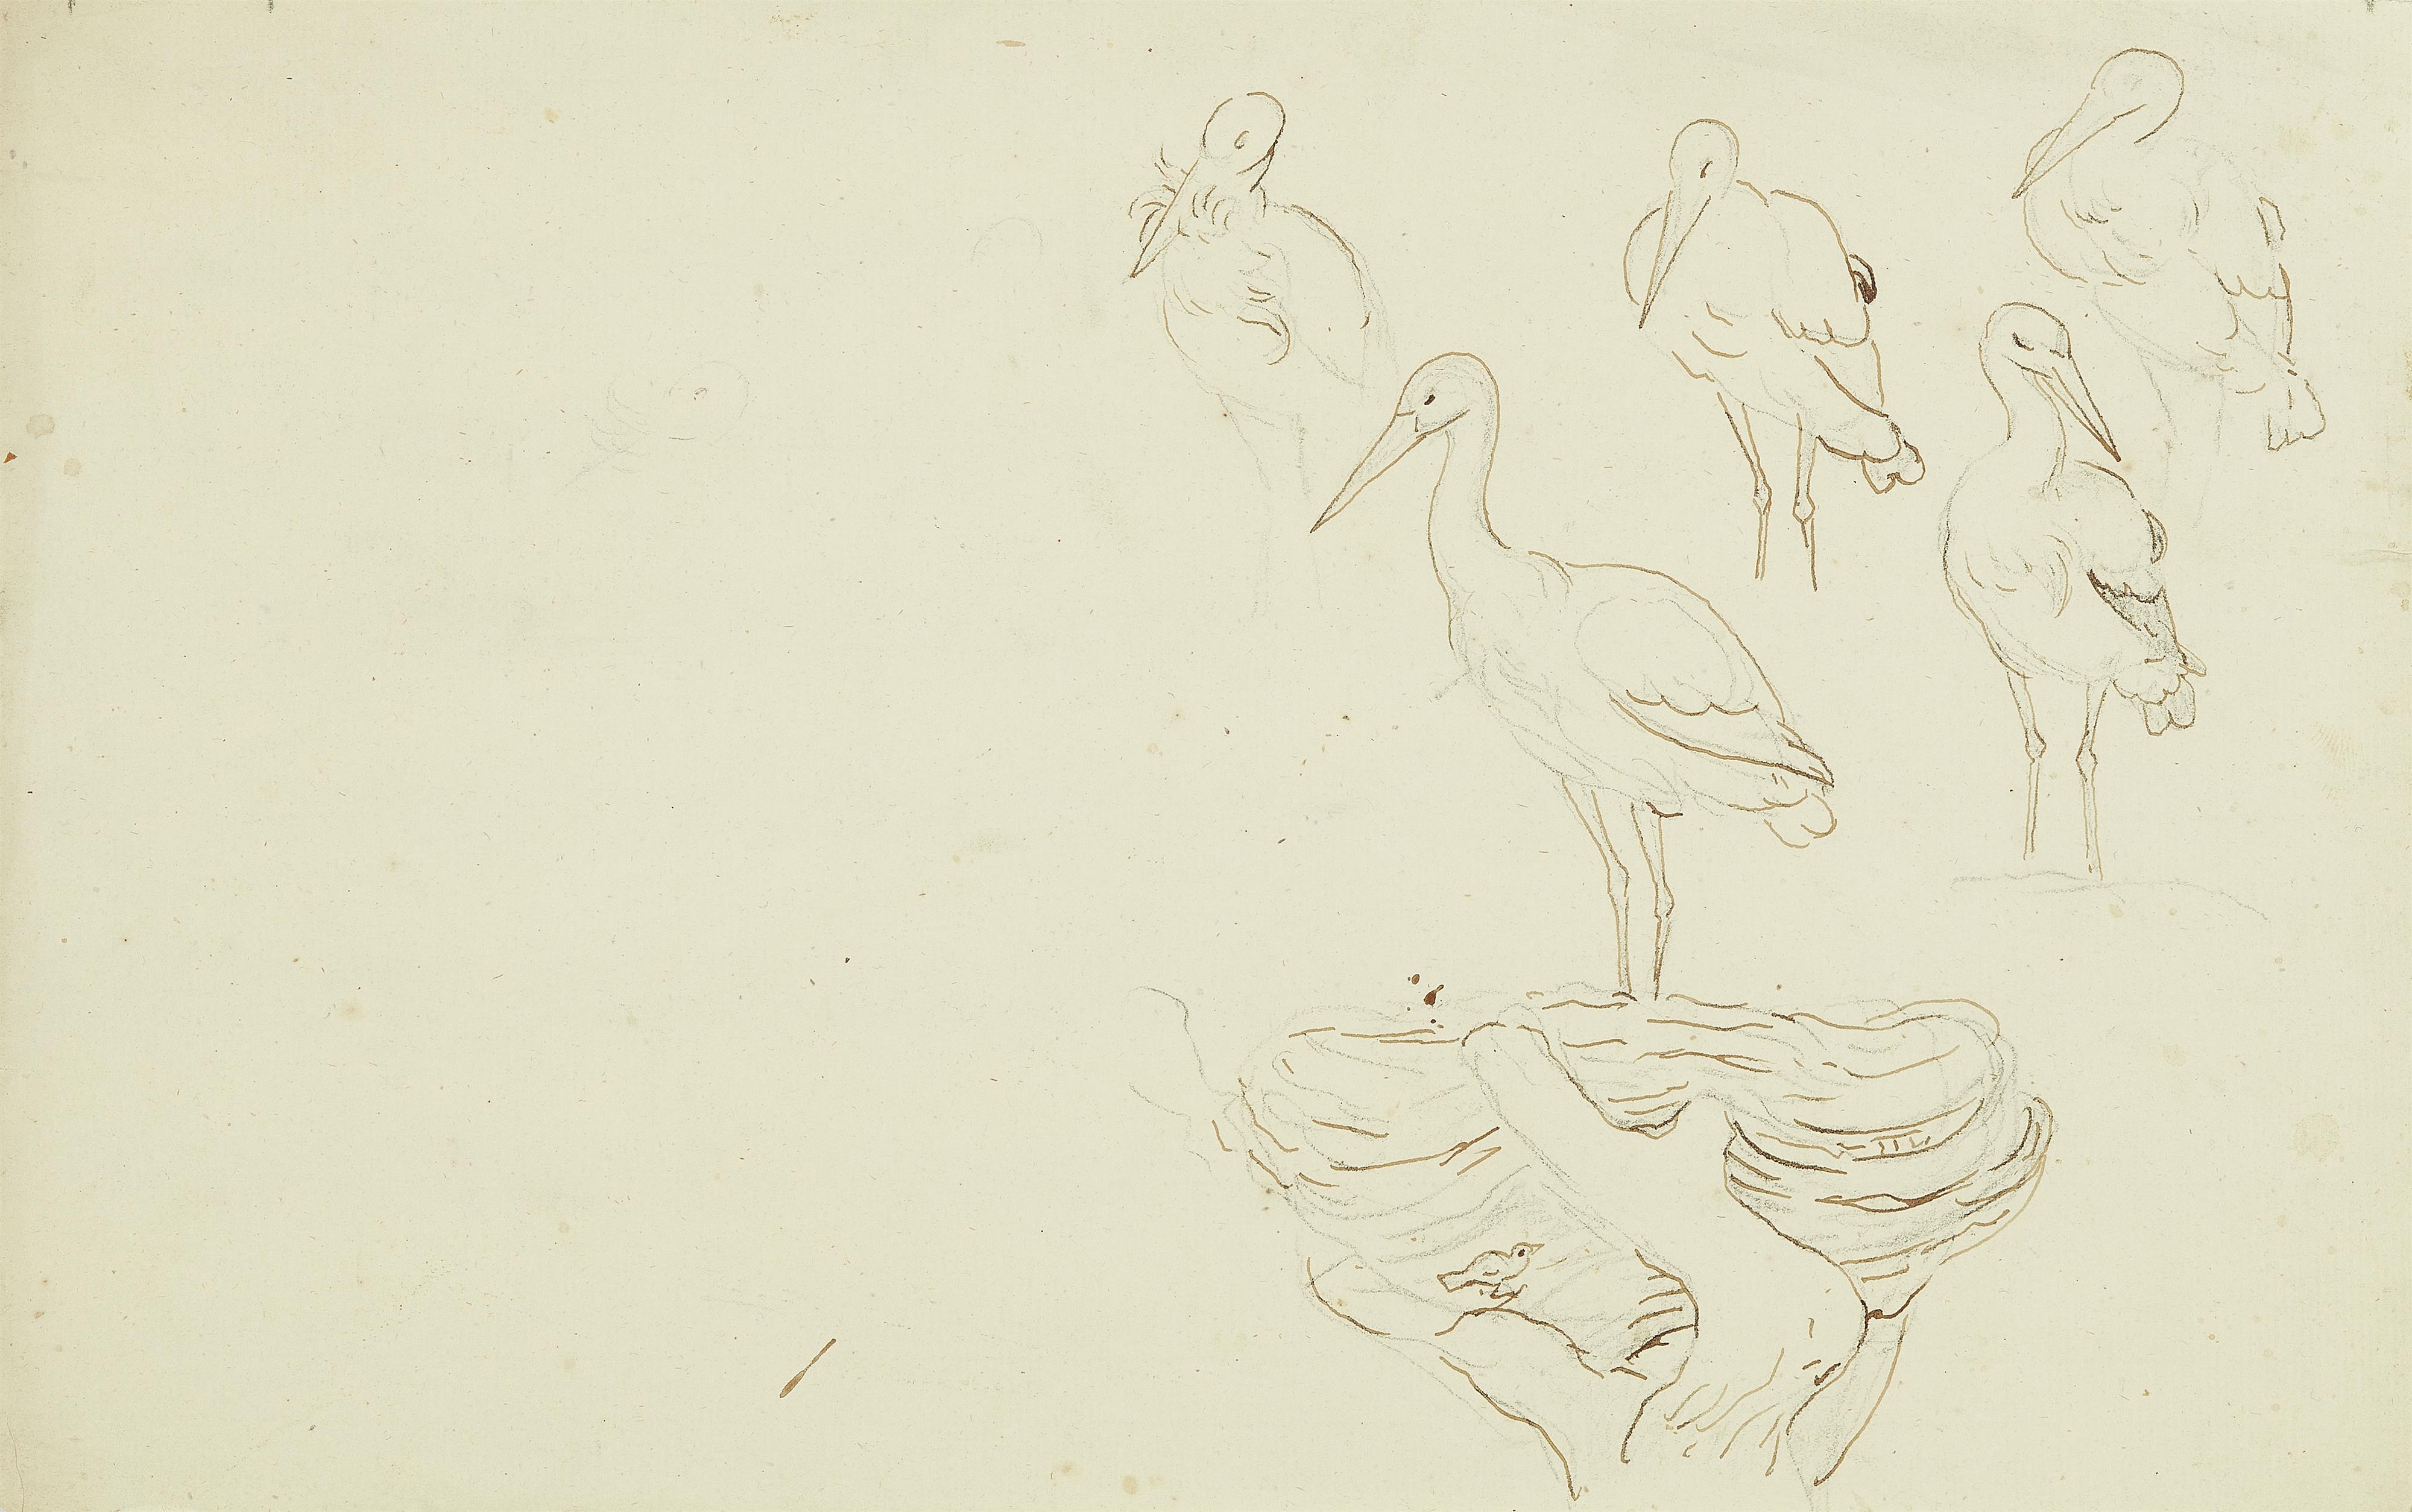 Johann Heinrich Wilhelm Tischbein - Stork and Ducks in Summer Landscape 
In addition: Two pencil sketches with storks - image-2